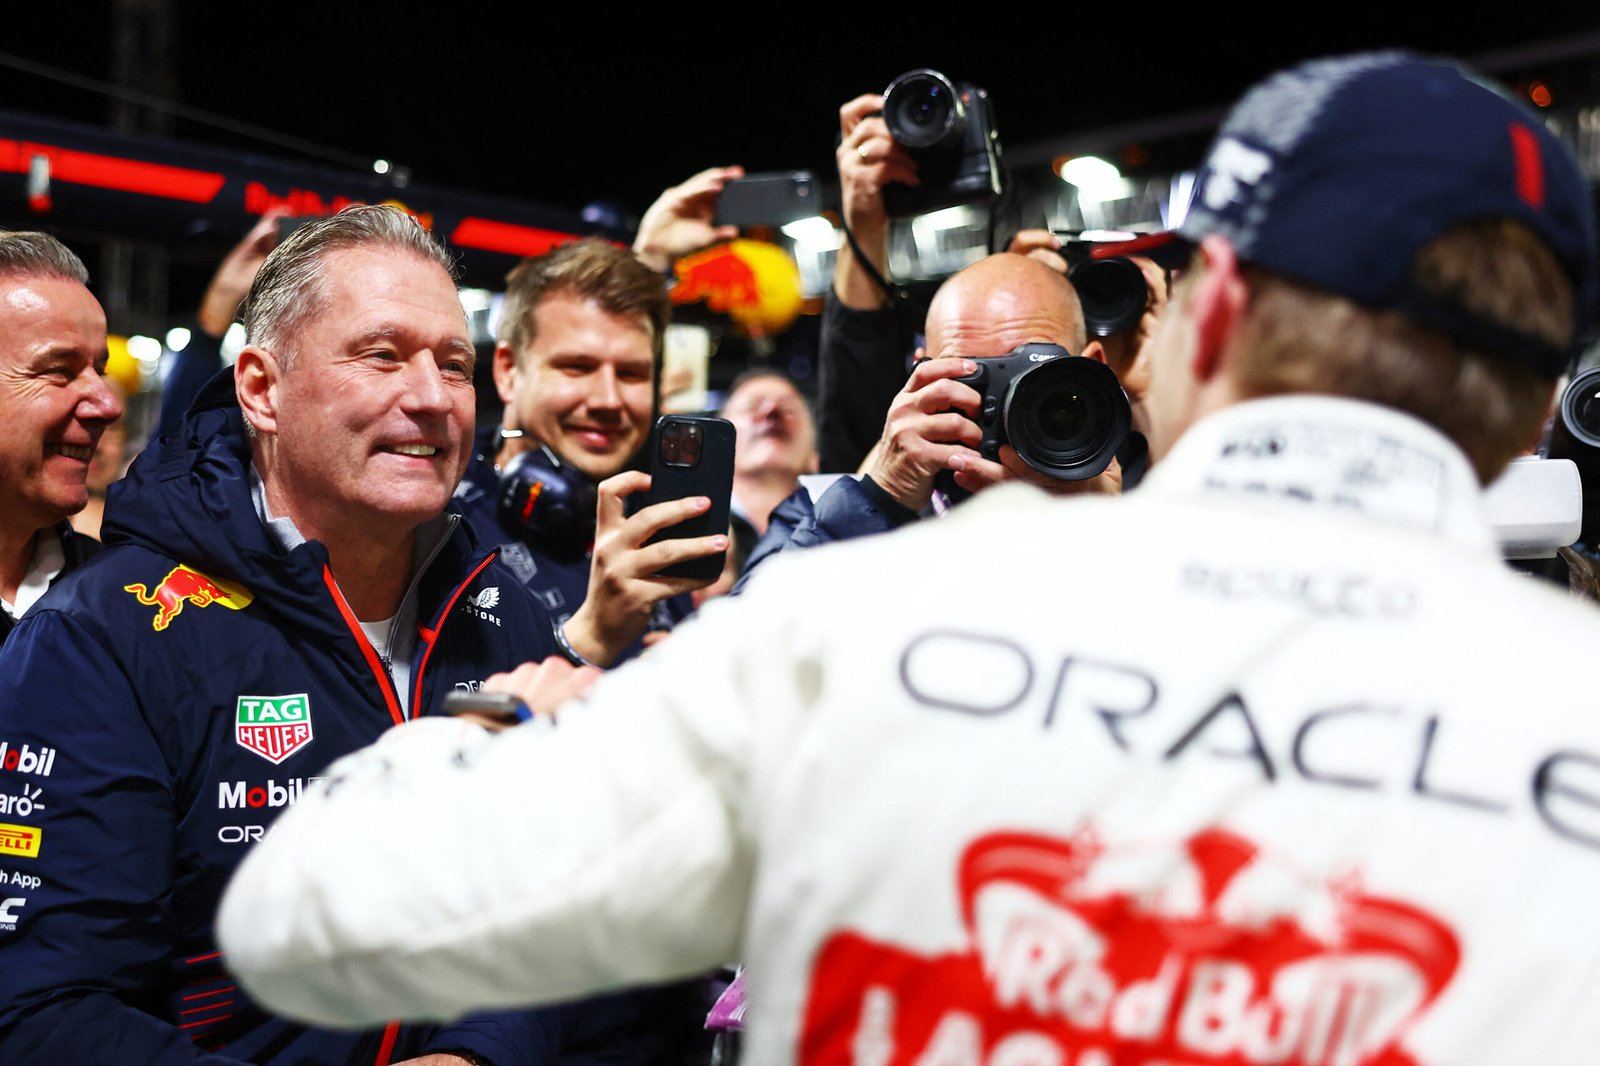 Jos Verstappen’s outburst raises big questions for Red Bull